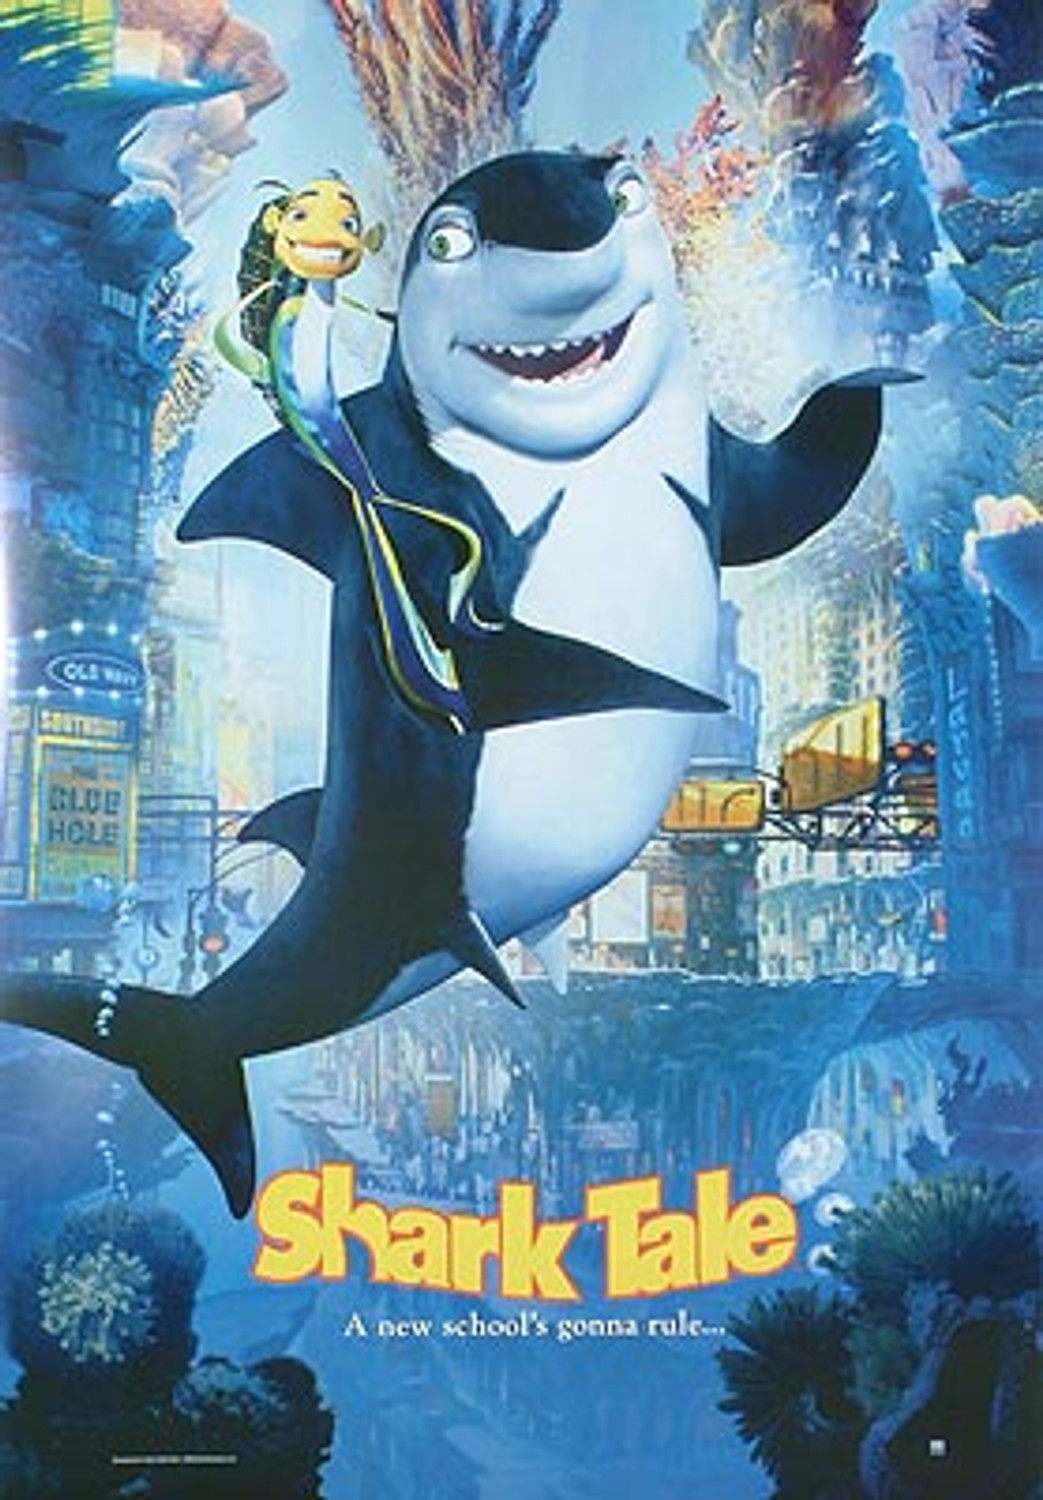 SHARK TALE (Shark & Fish Reprint) POSTER buy movie posters at